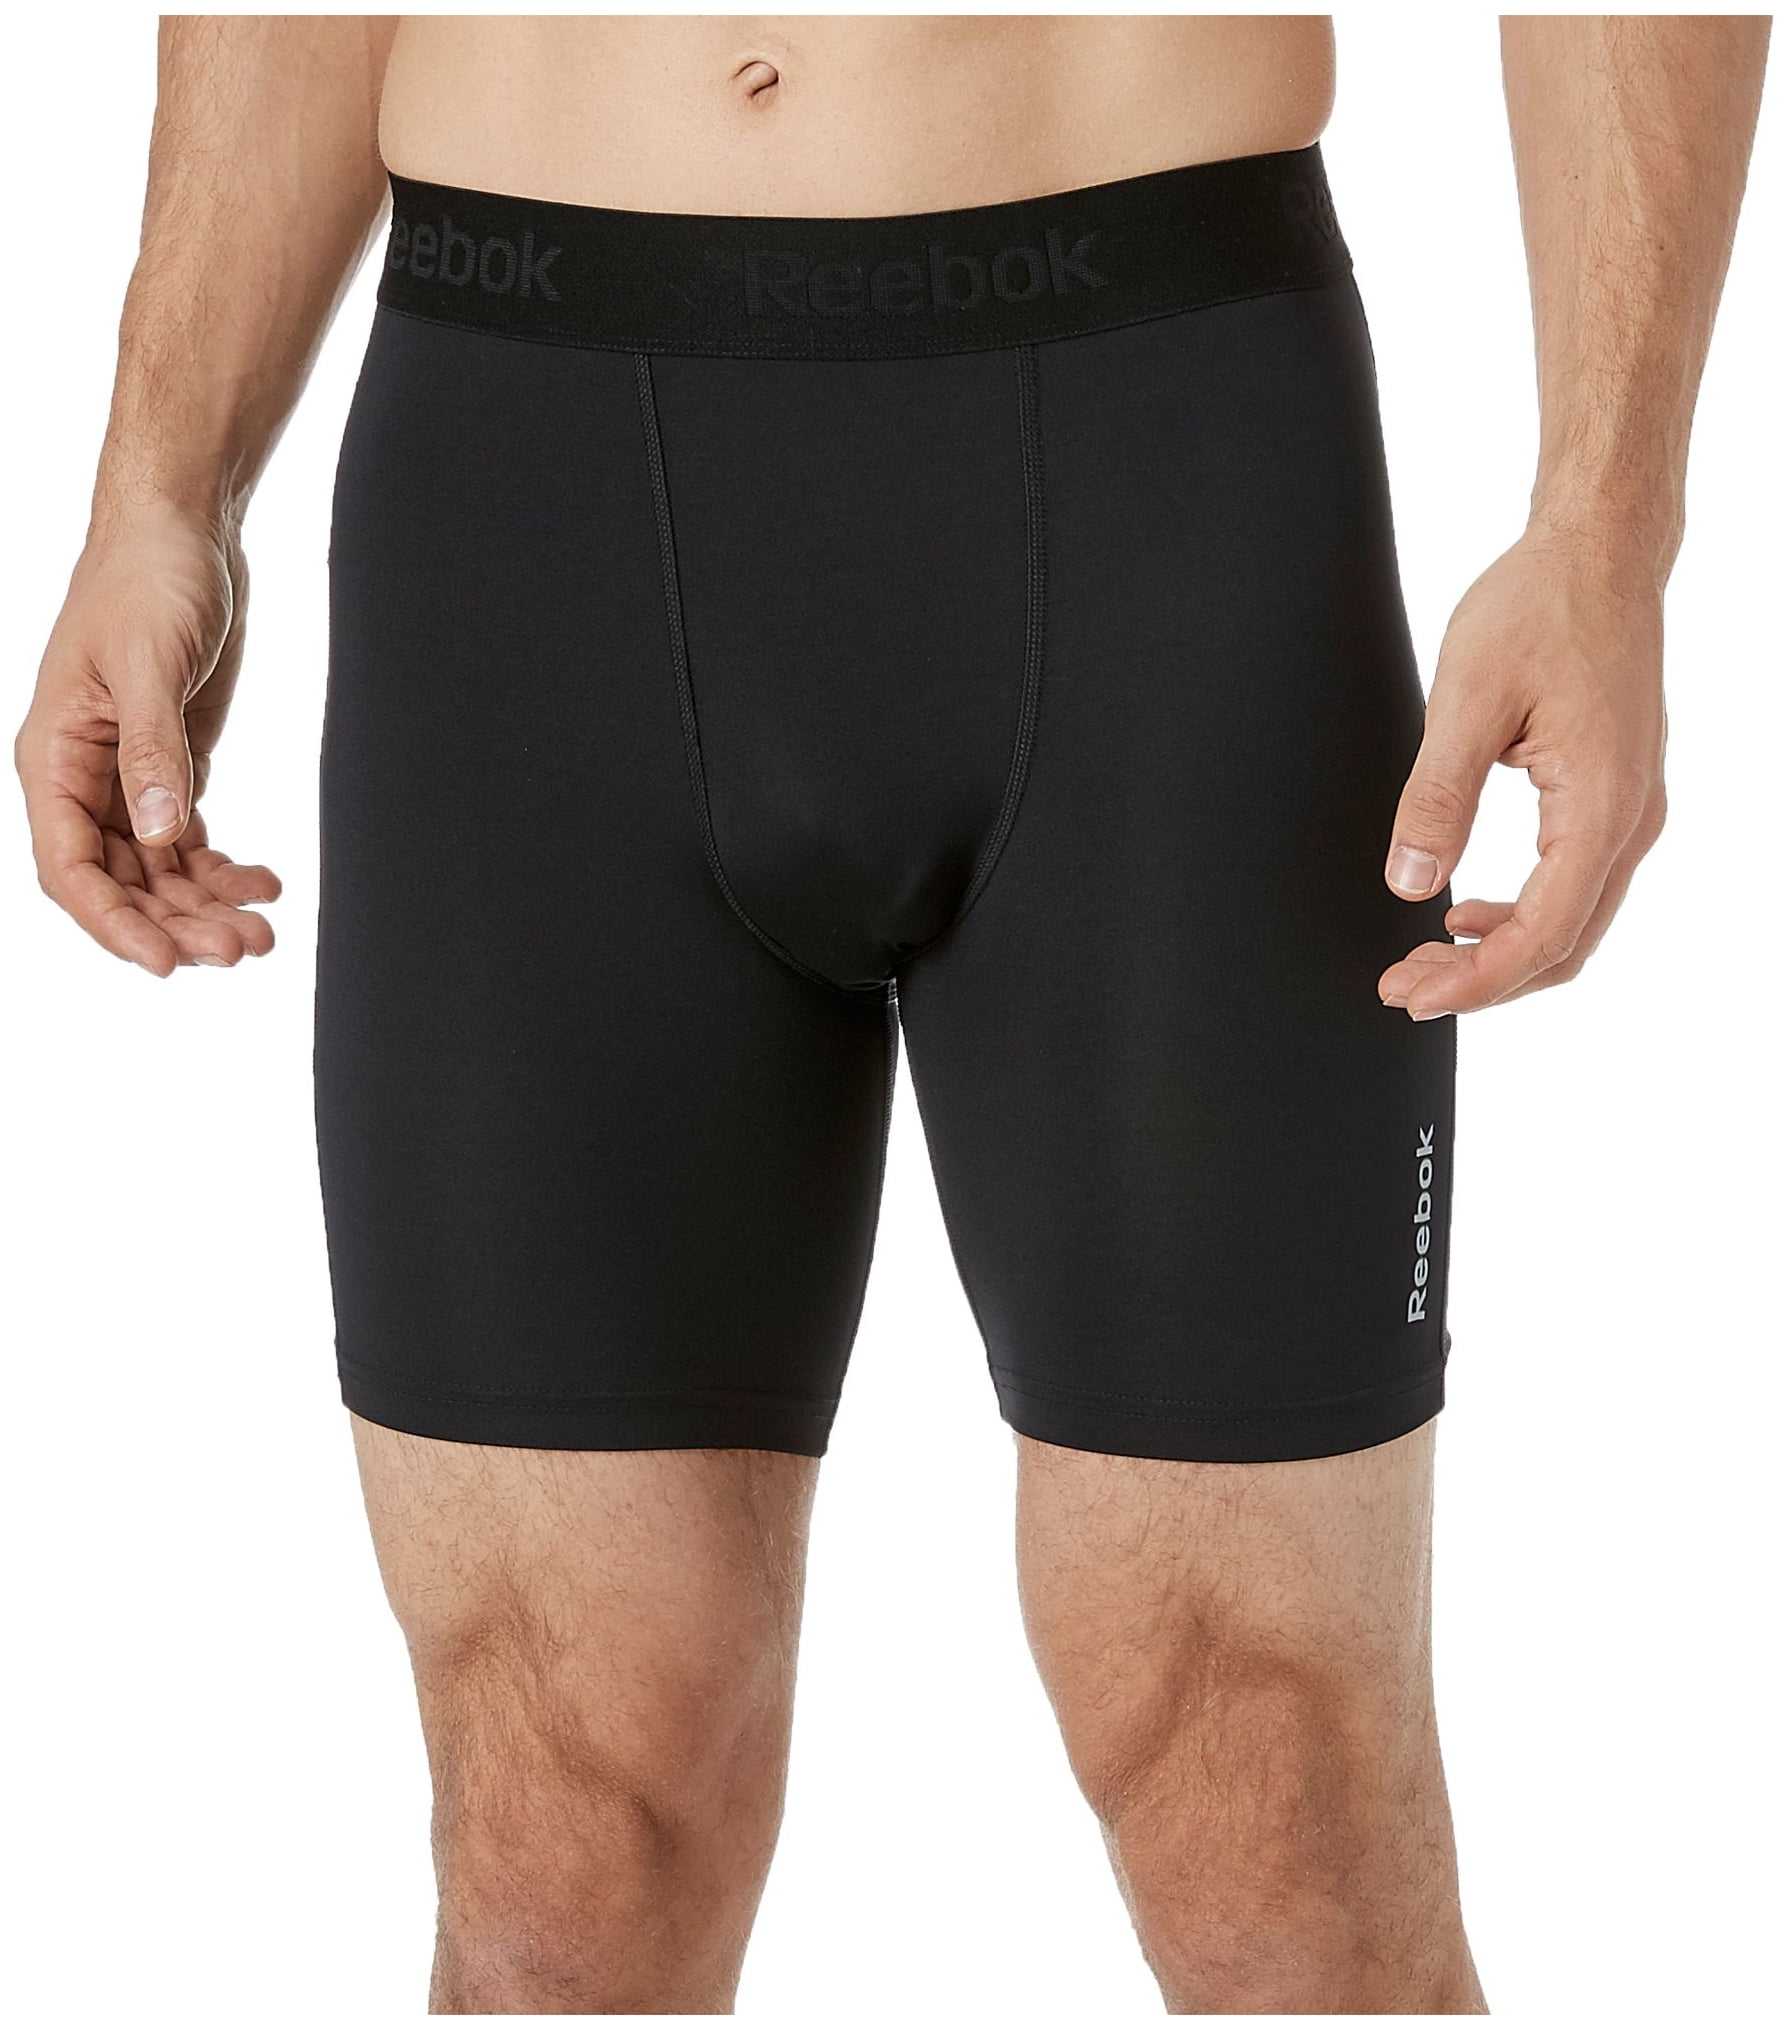 reebok 7 inch compression shorts